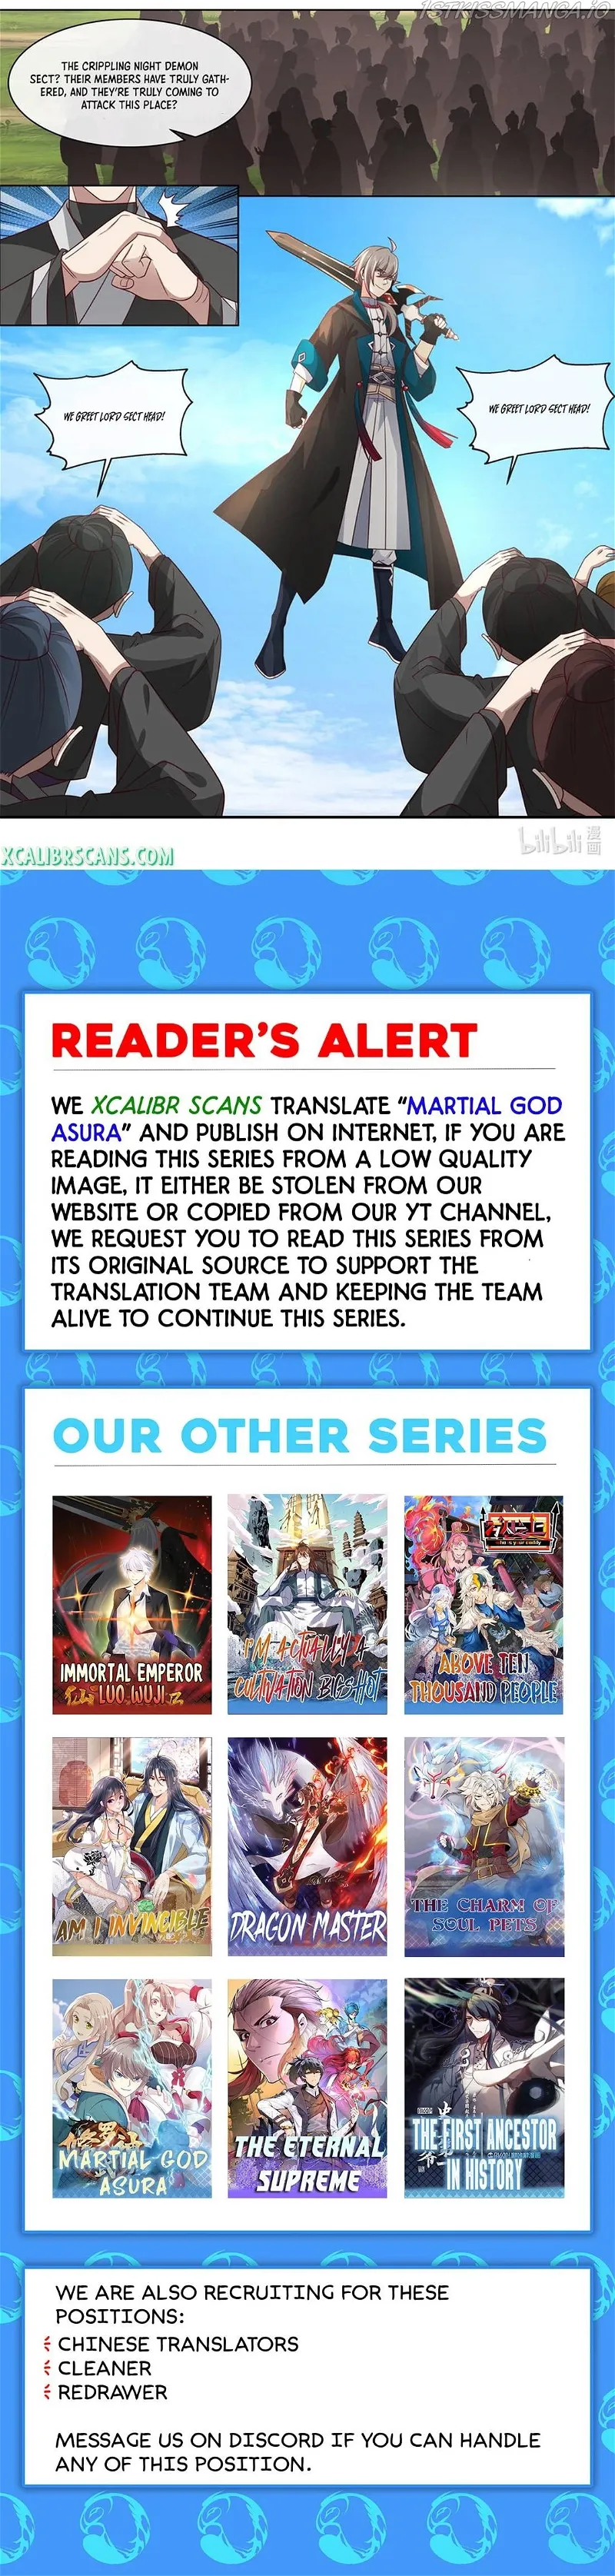 Martial God Asura Chapter 615 page 10